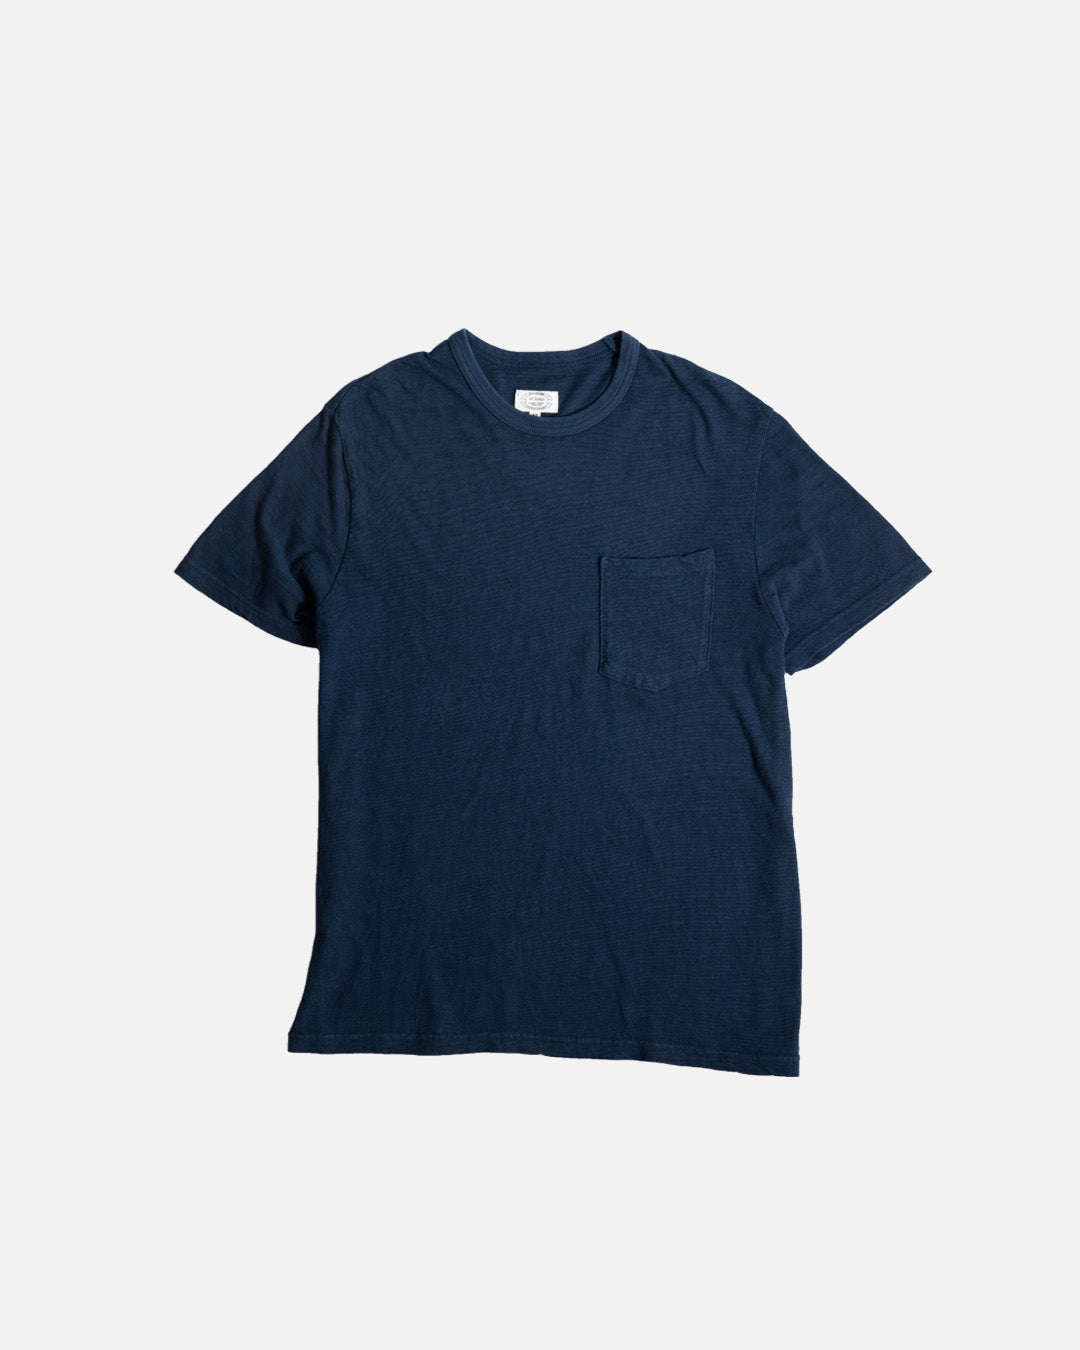 The Decorum Navy Loopweel Pocket T-Shirt